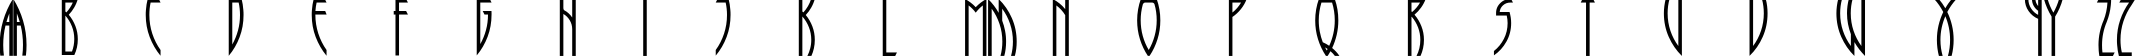 Пример написания английского алфавита шрифтом Runy-Tunes